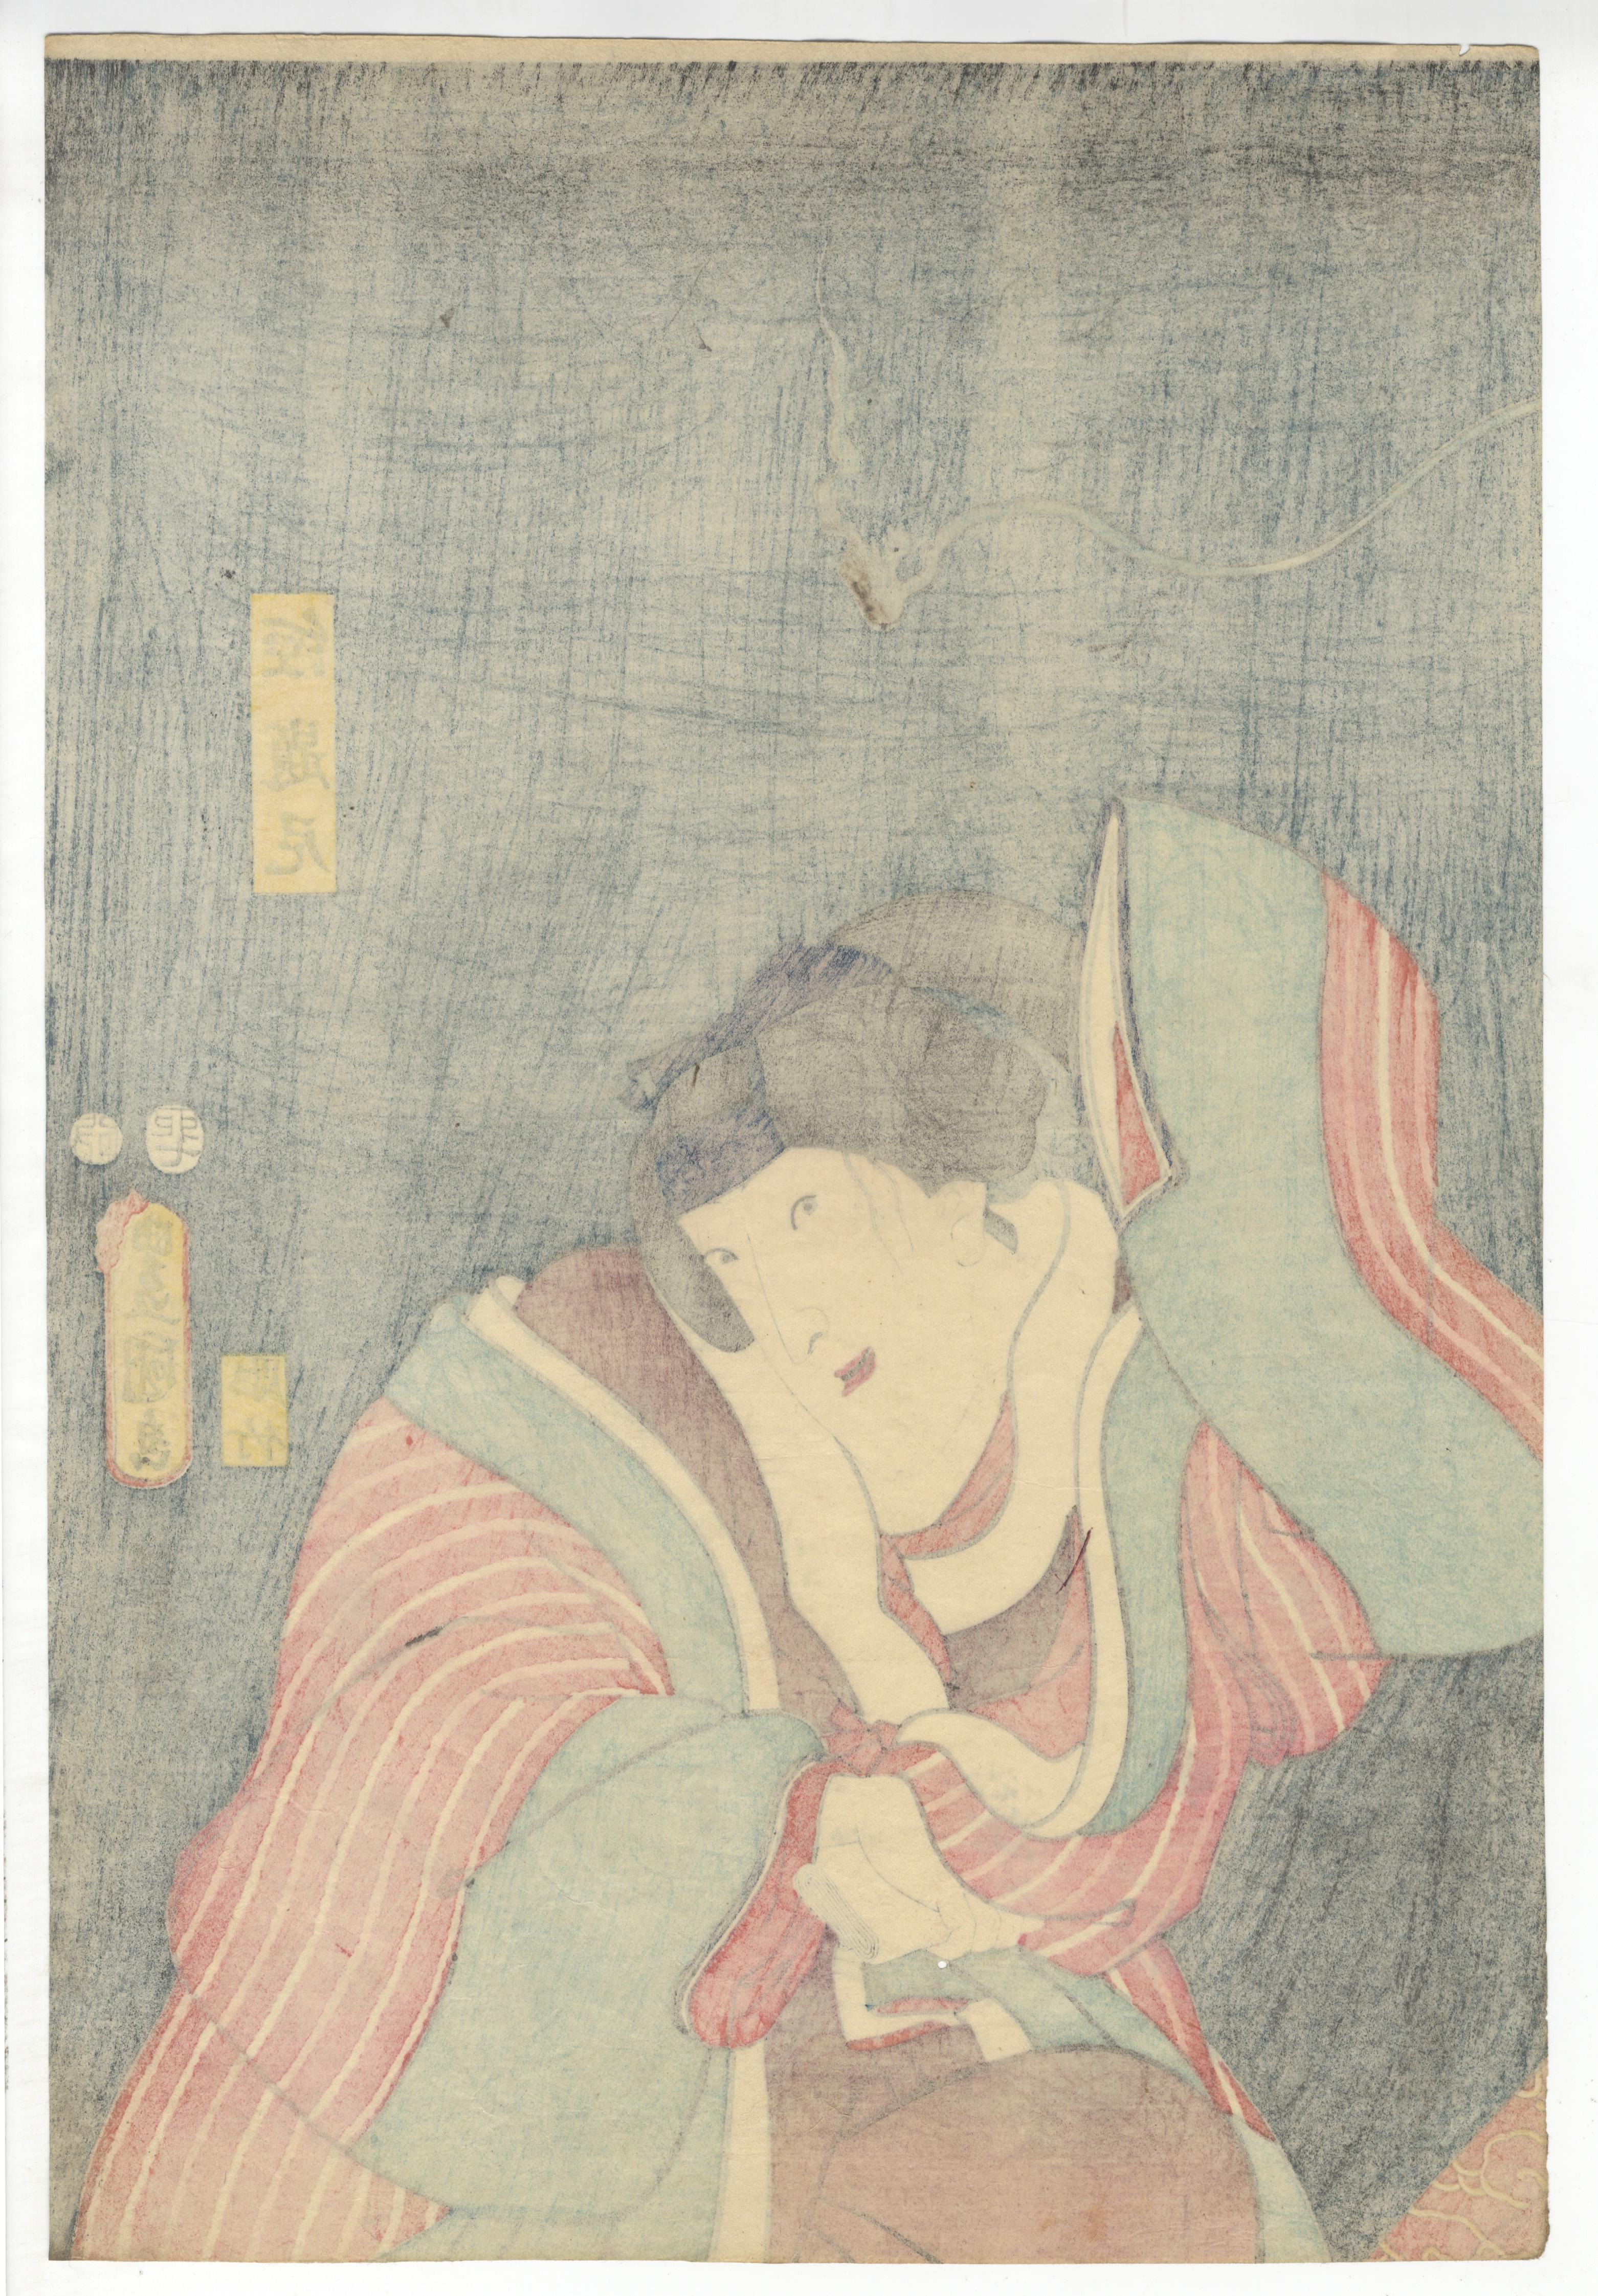 Hand-Crafted Utagawa Toyokuni Diptych Japanese Woodblock Print Ukiyo-e, Tragic Love Story For Sale